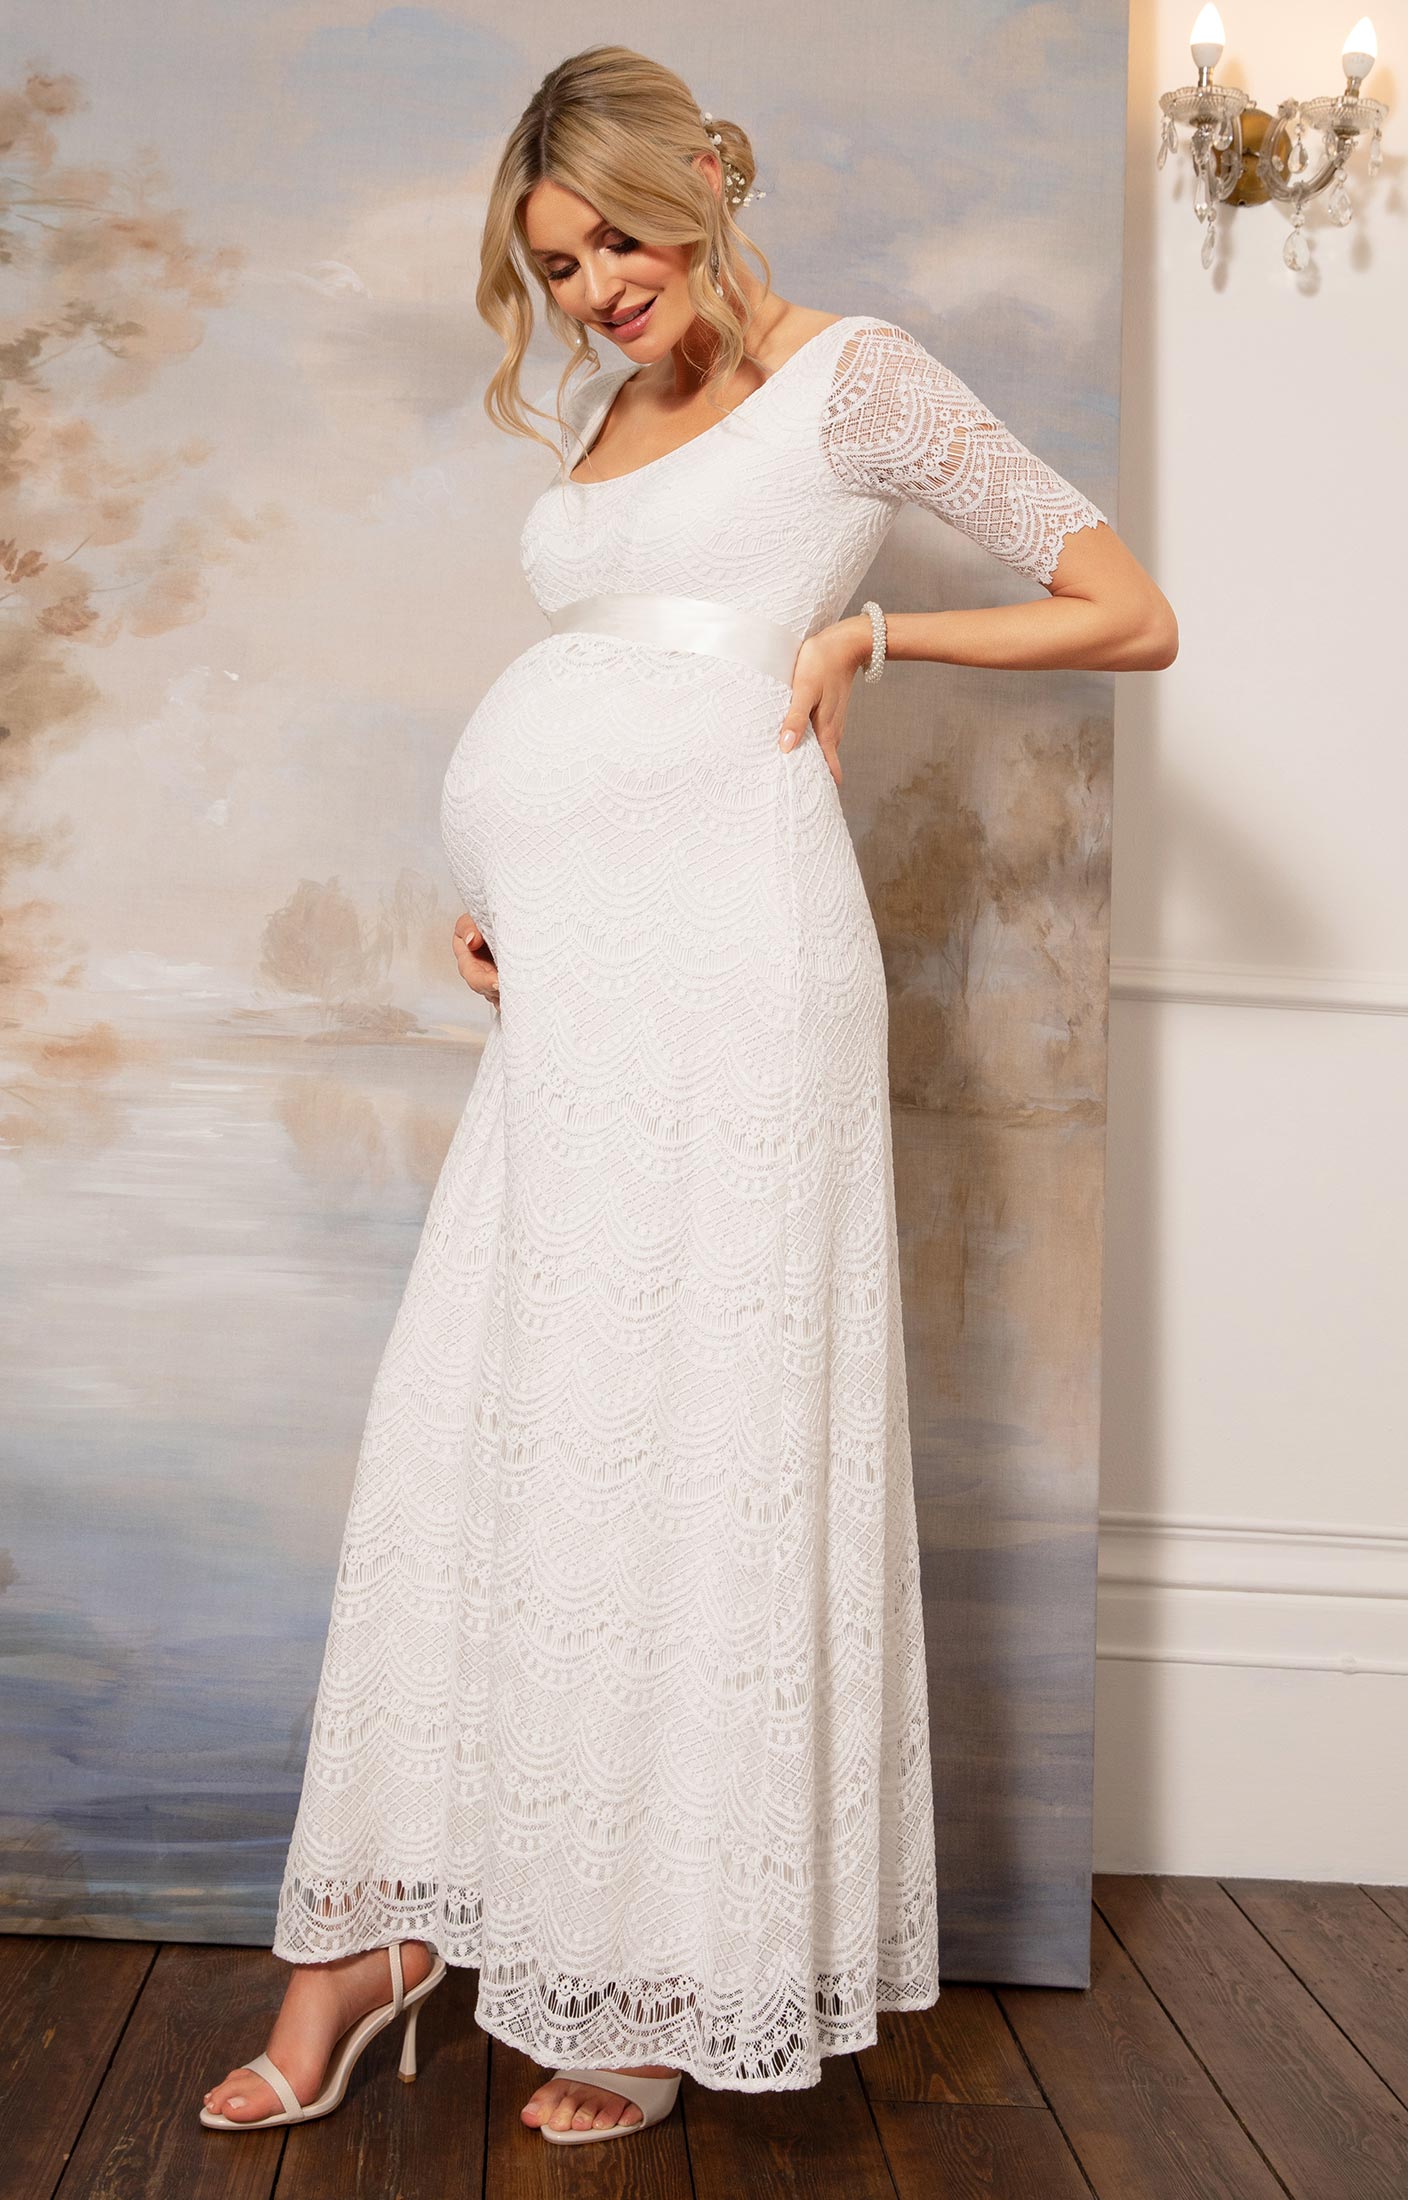 Verona Maternity Wedding Gown Ivory White